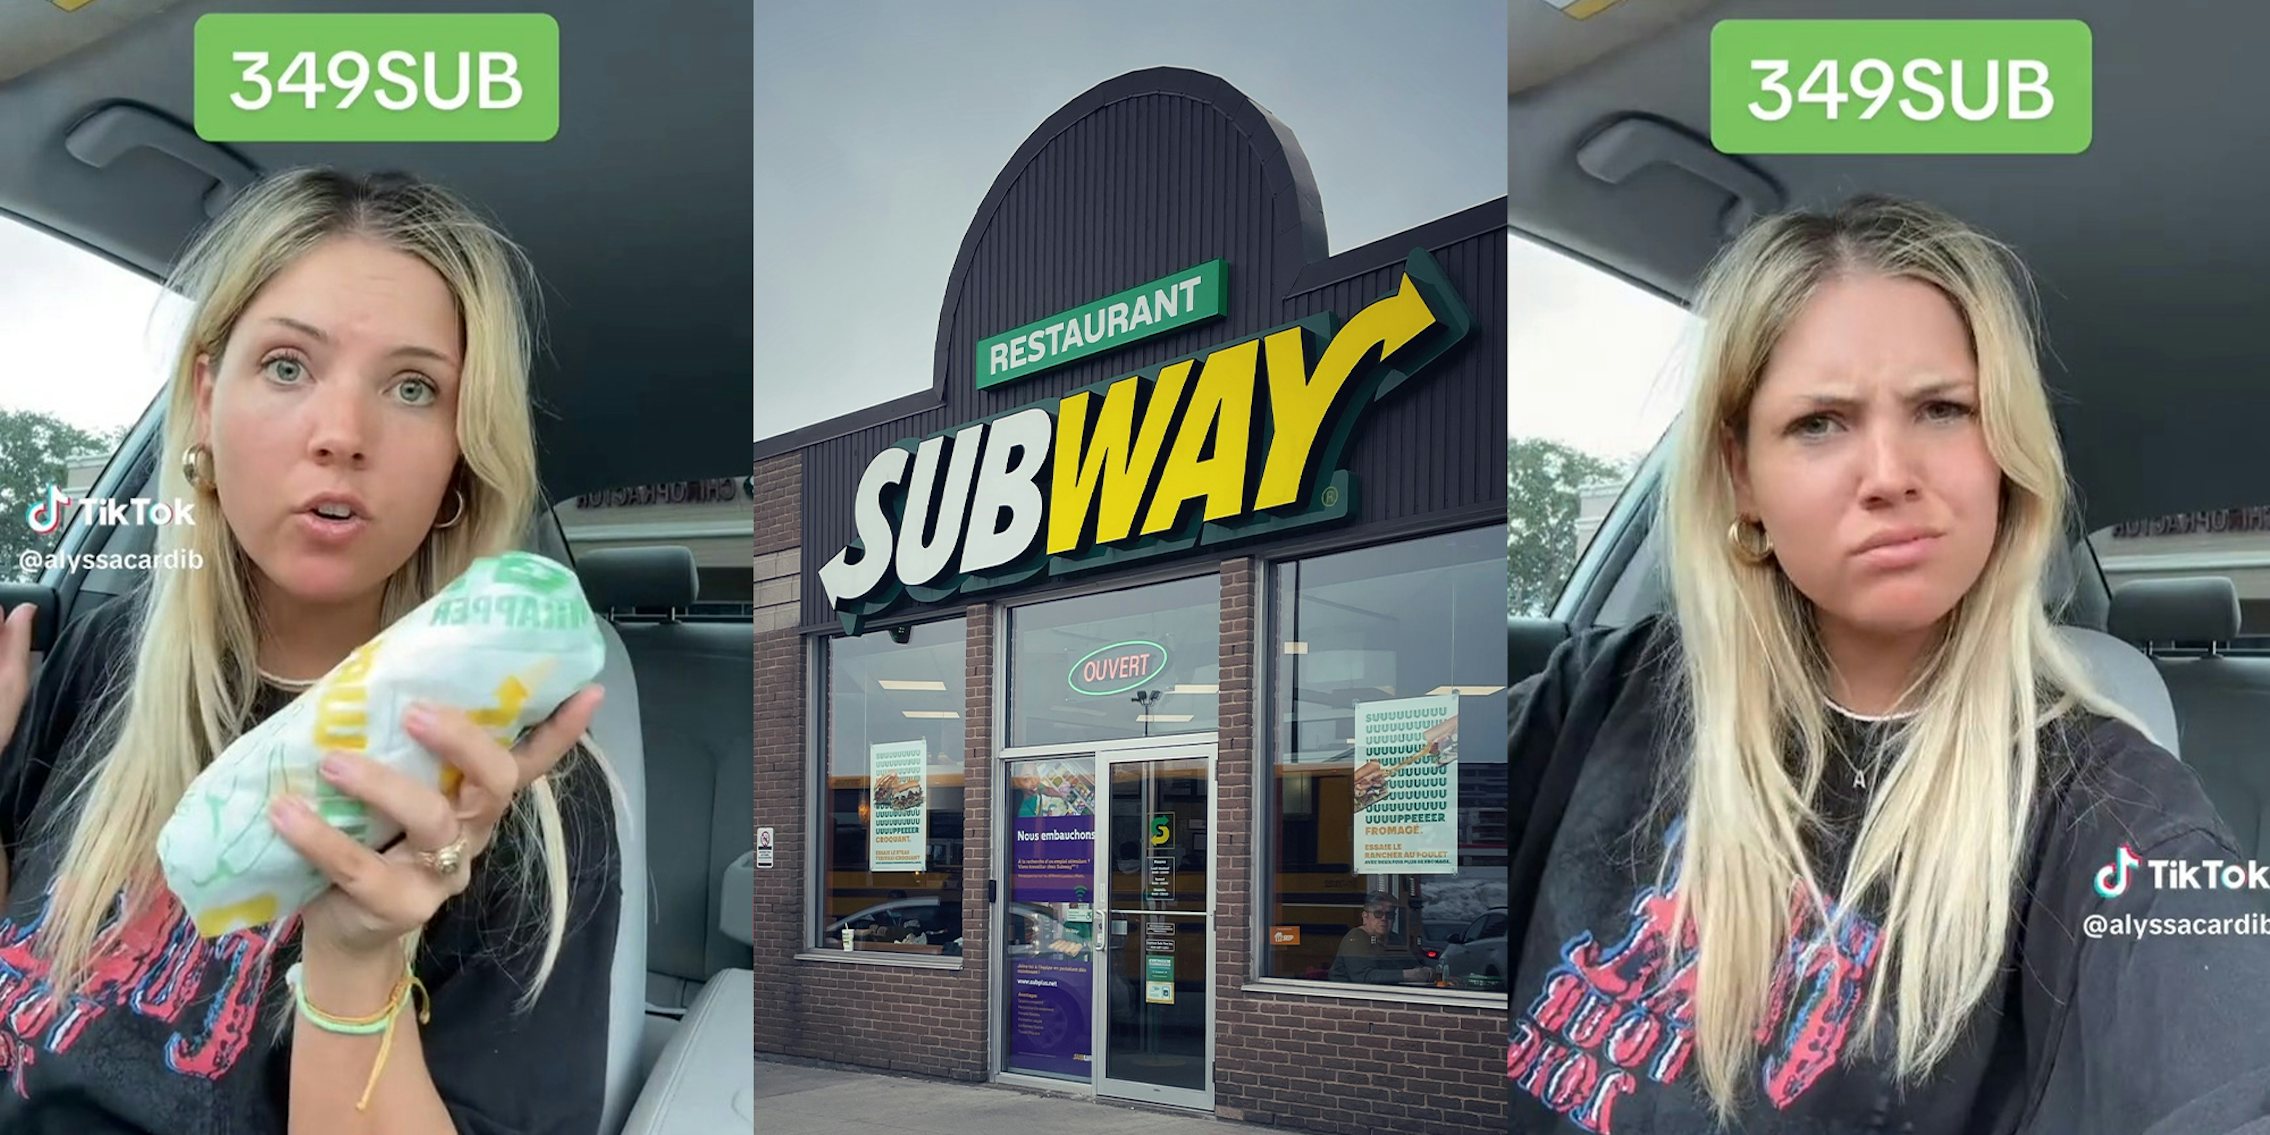 Woman wearing black t shirt inside of car holding a subway sandwich